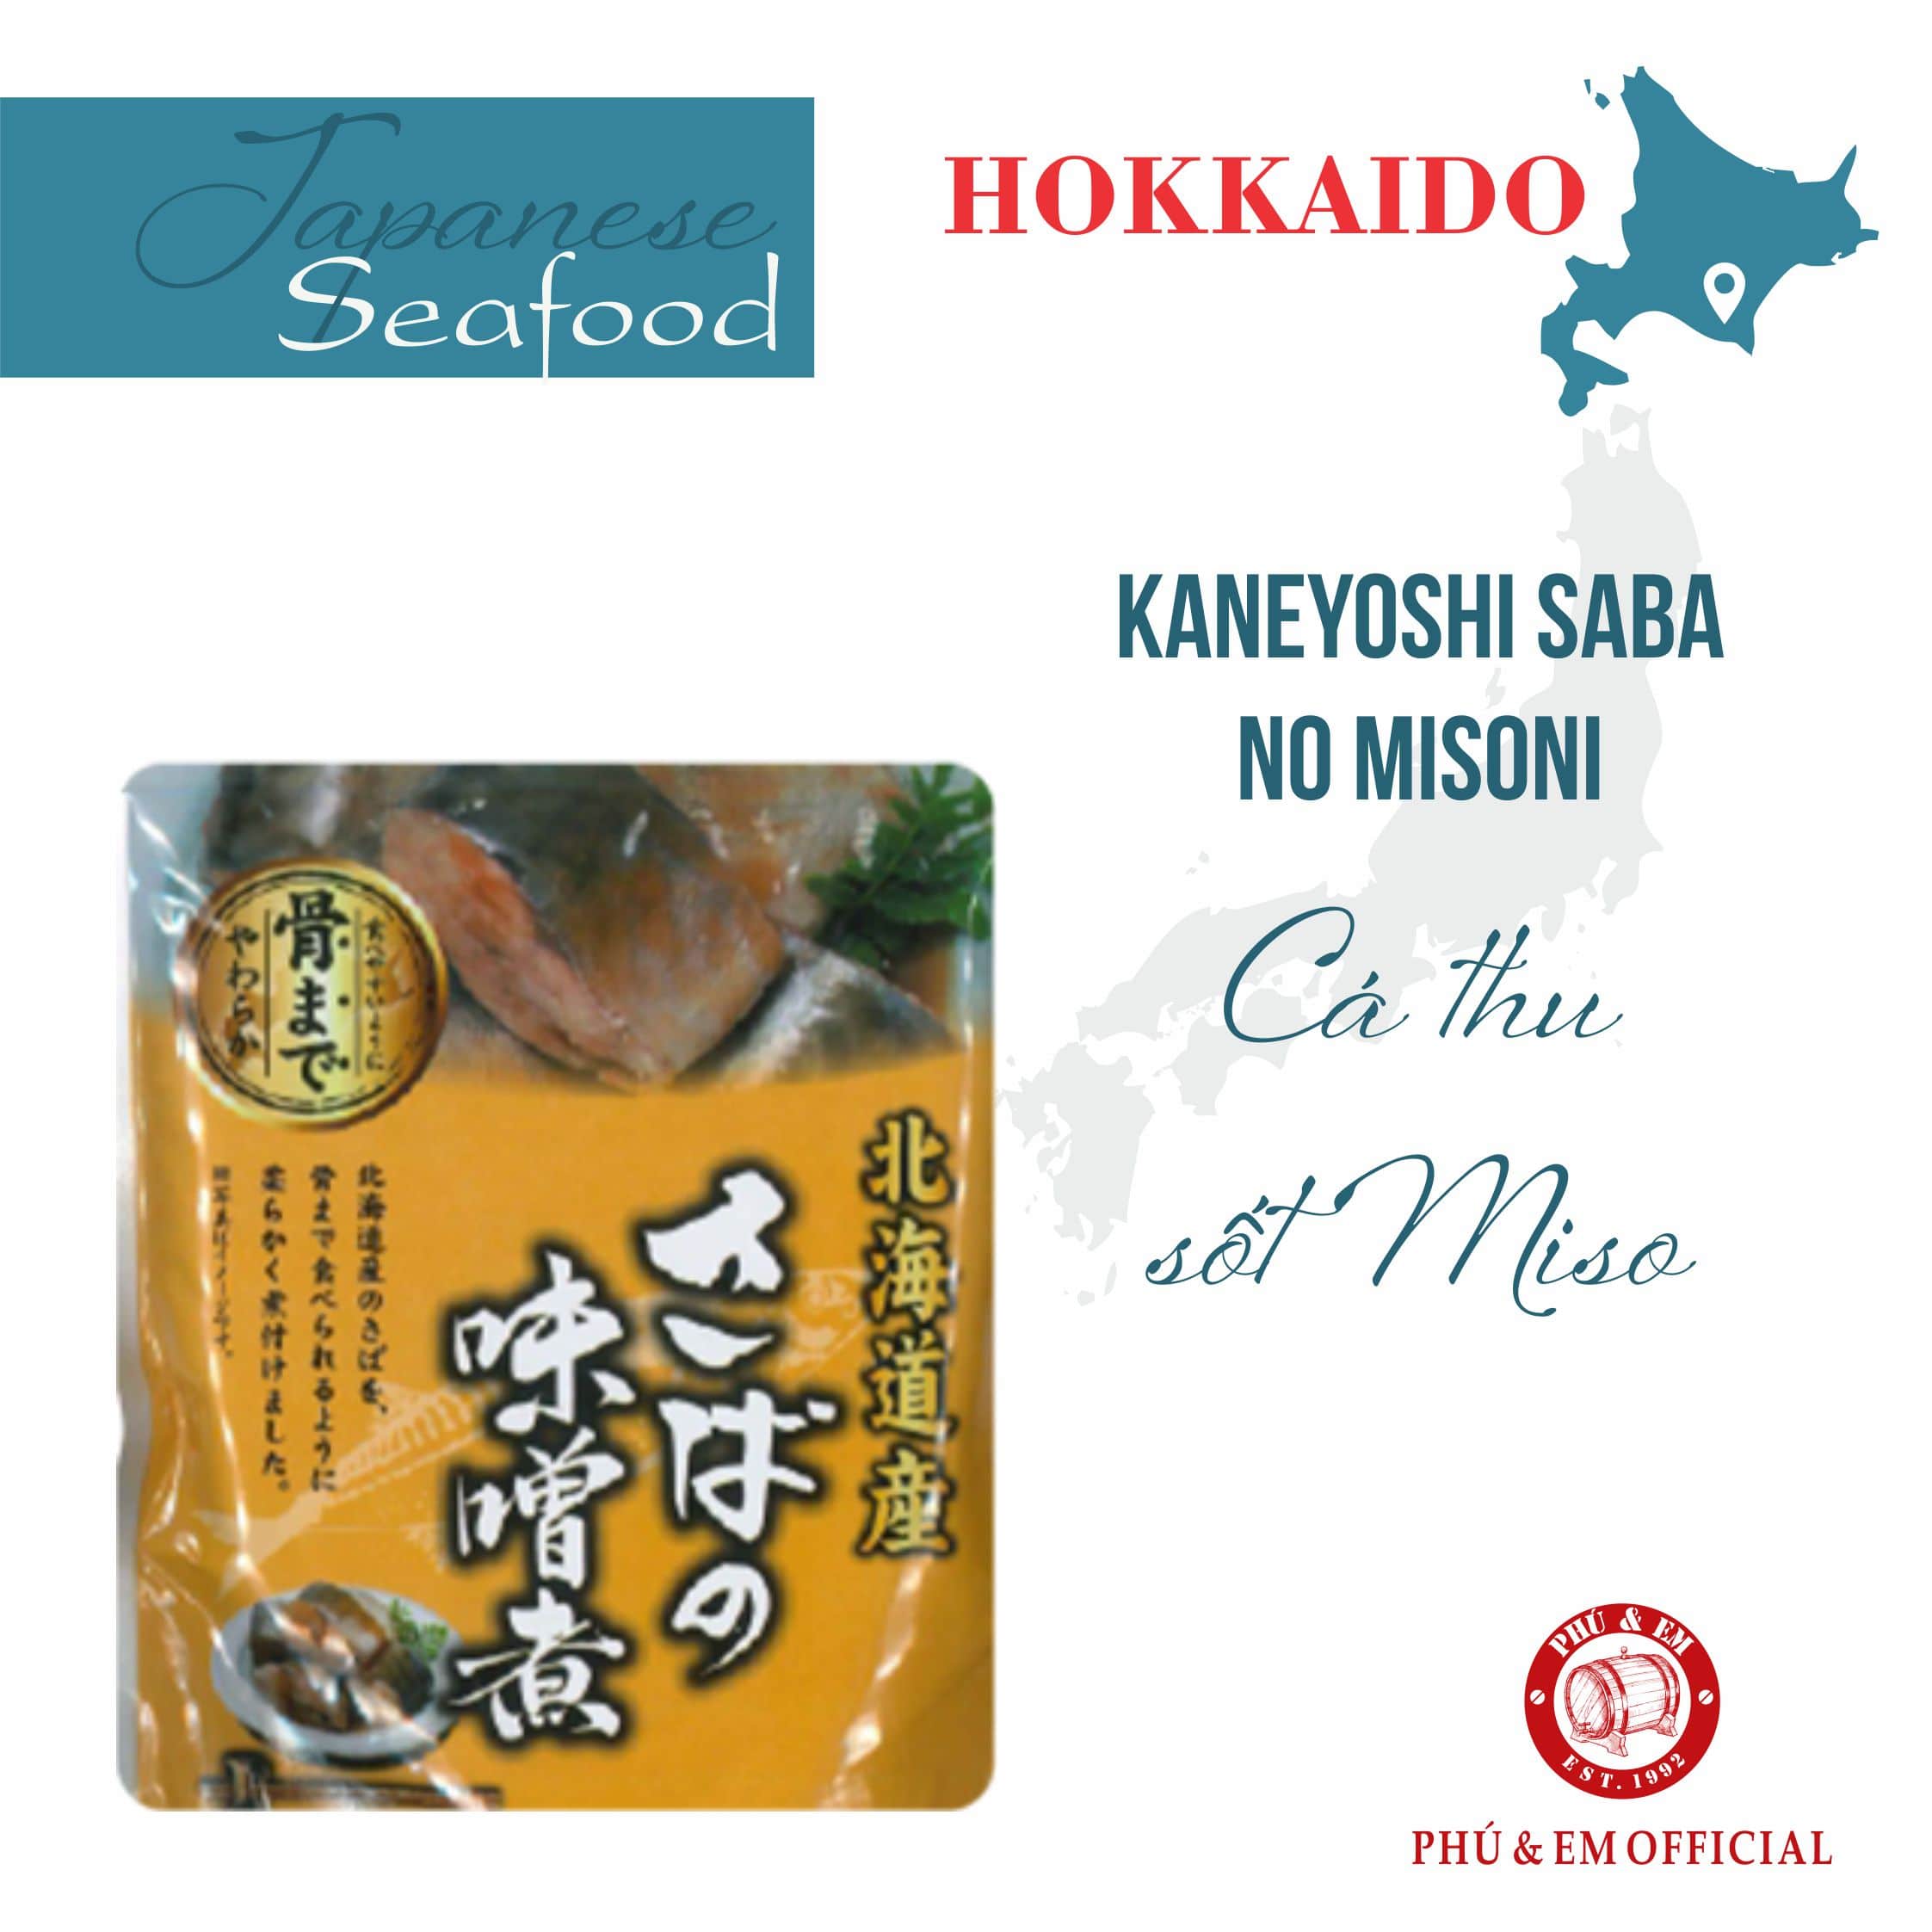 Cá Thu Sốt Miso - Kaneyoshi Saba No Misoni